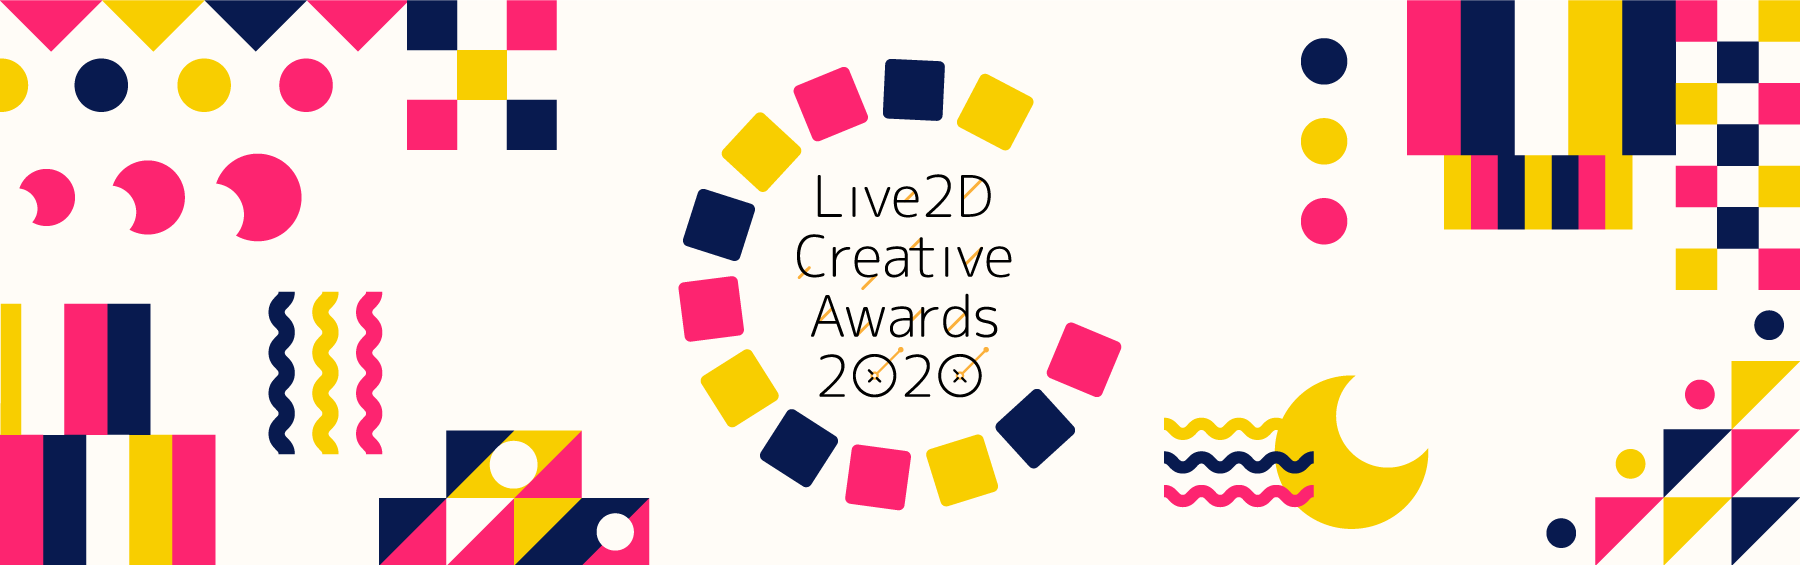 Live2D Creative Awards 2020